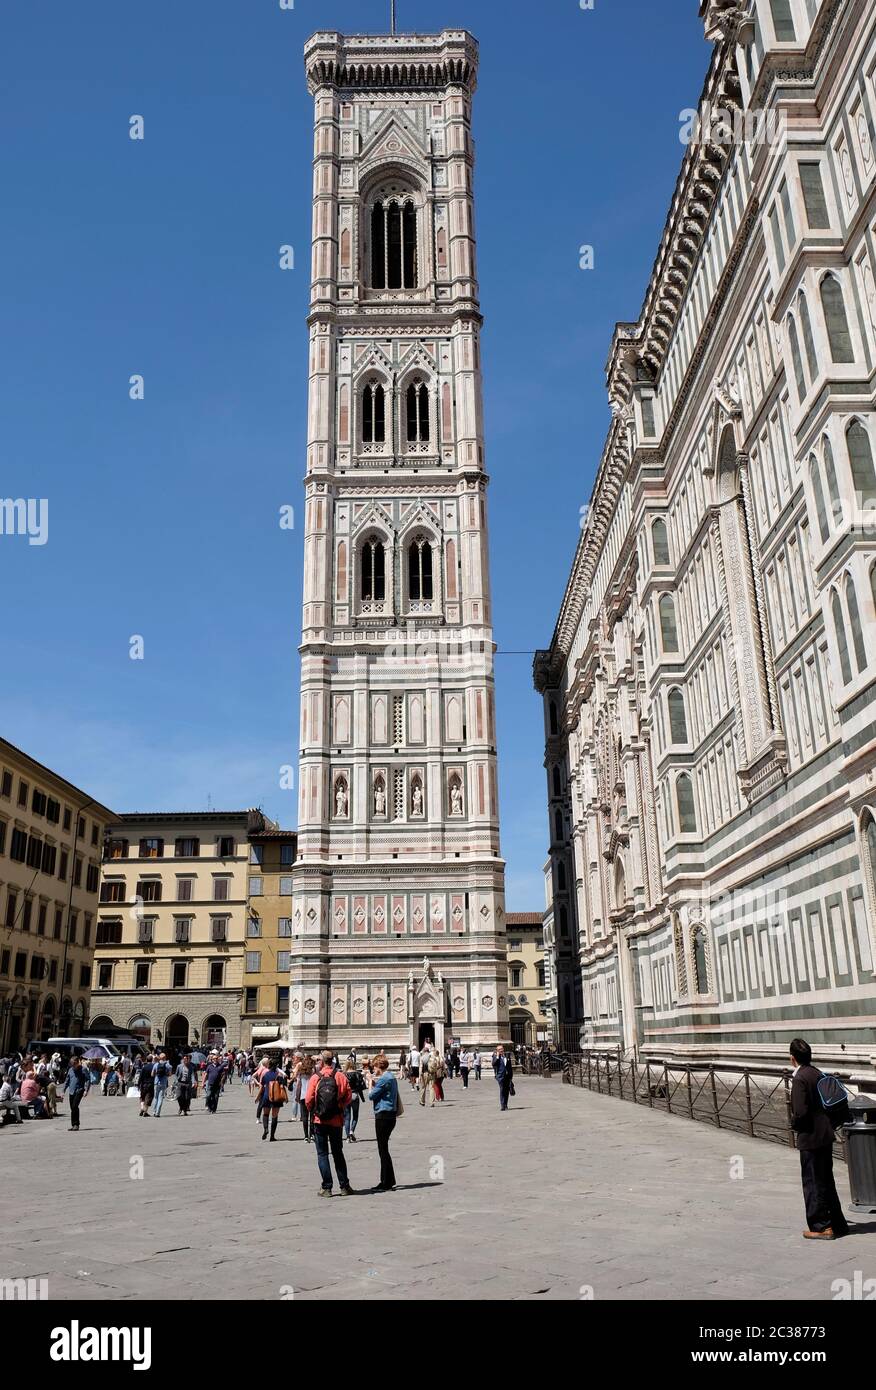 Giotto's Campanile in the Piazza del Duomo, Florence, Italy Stock Photo